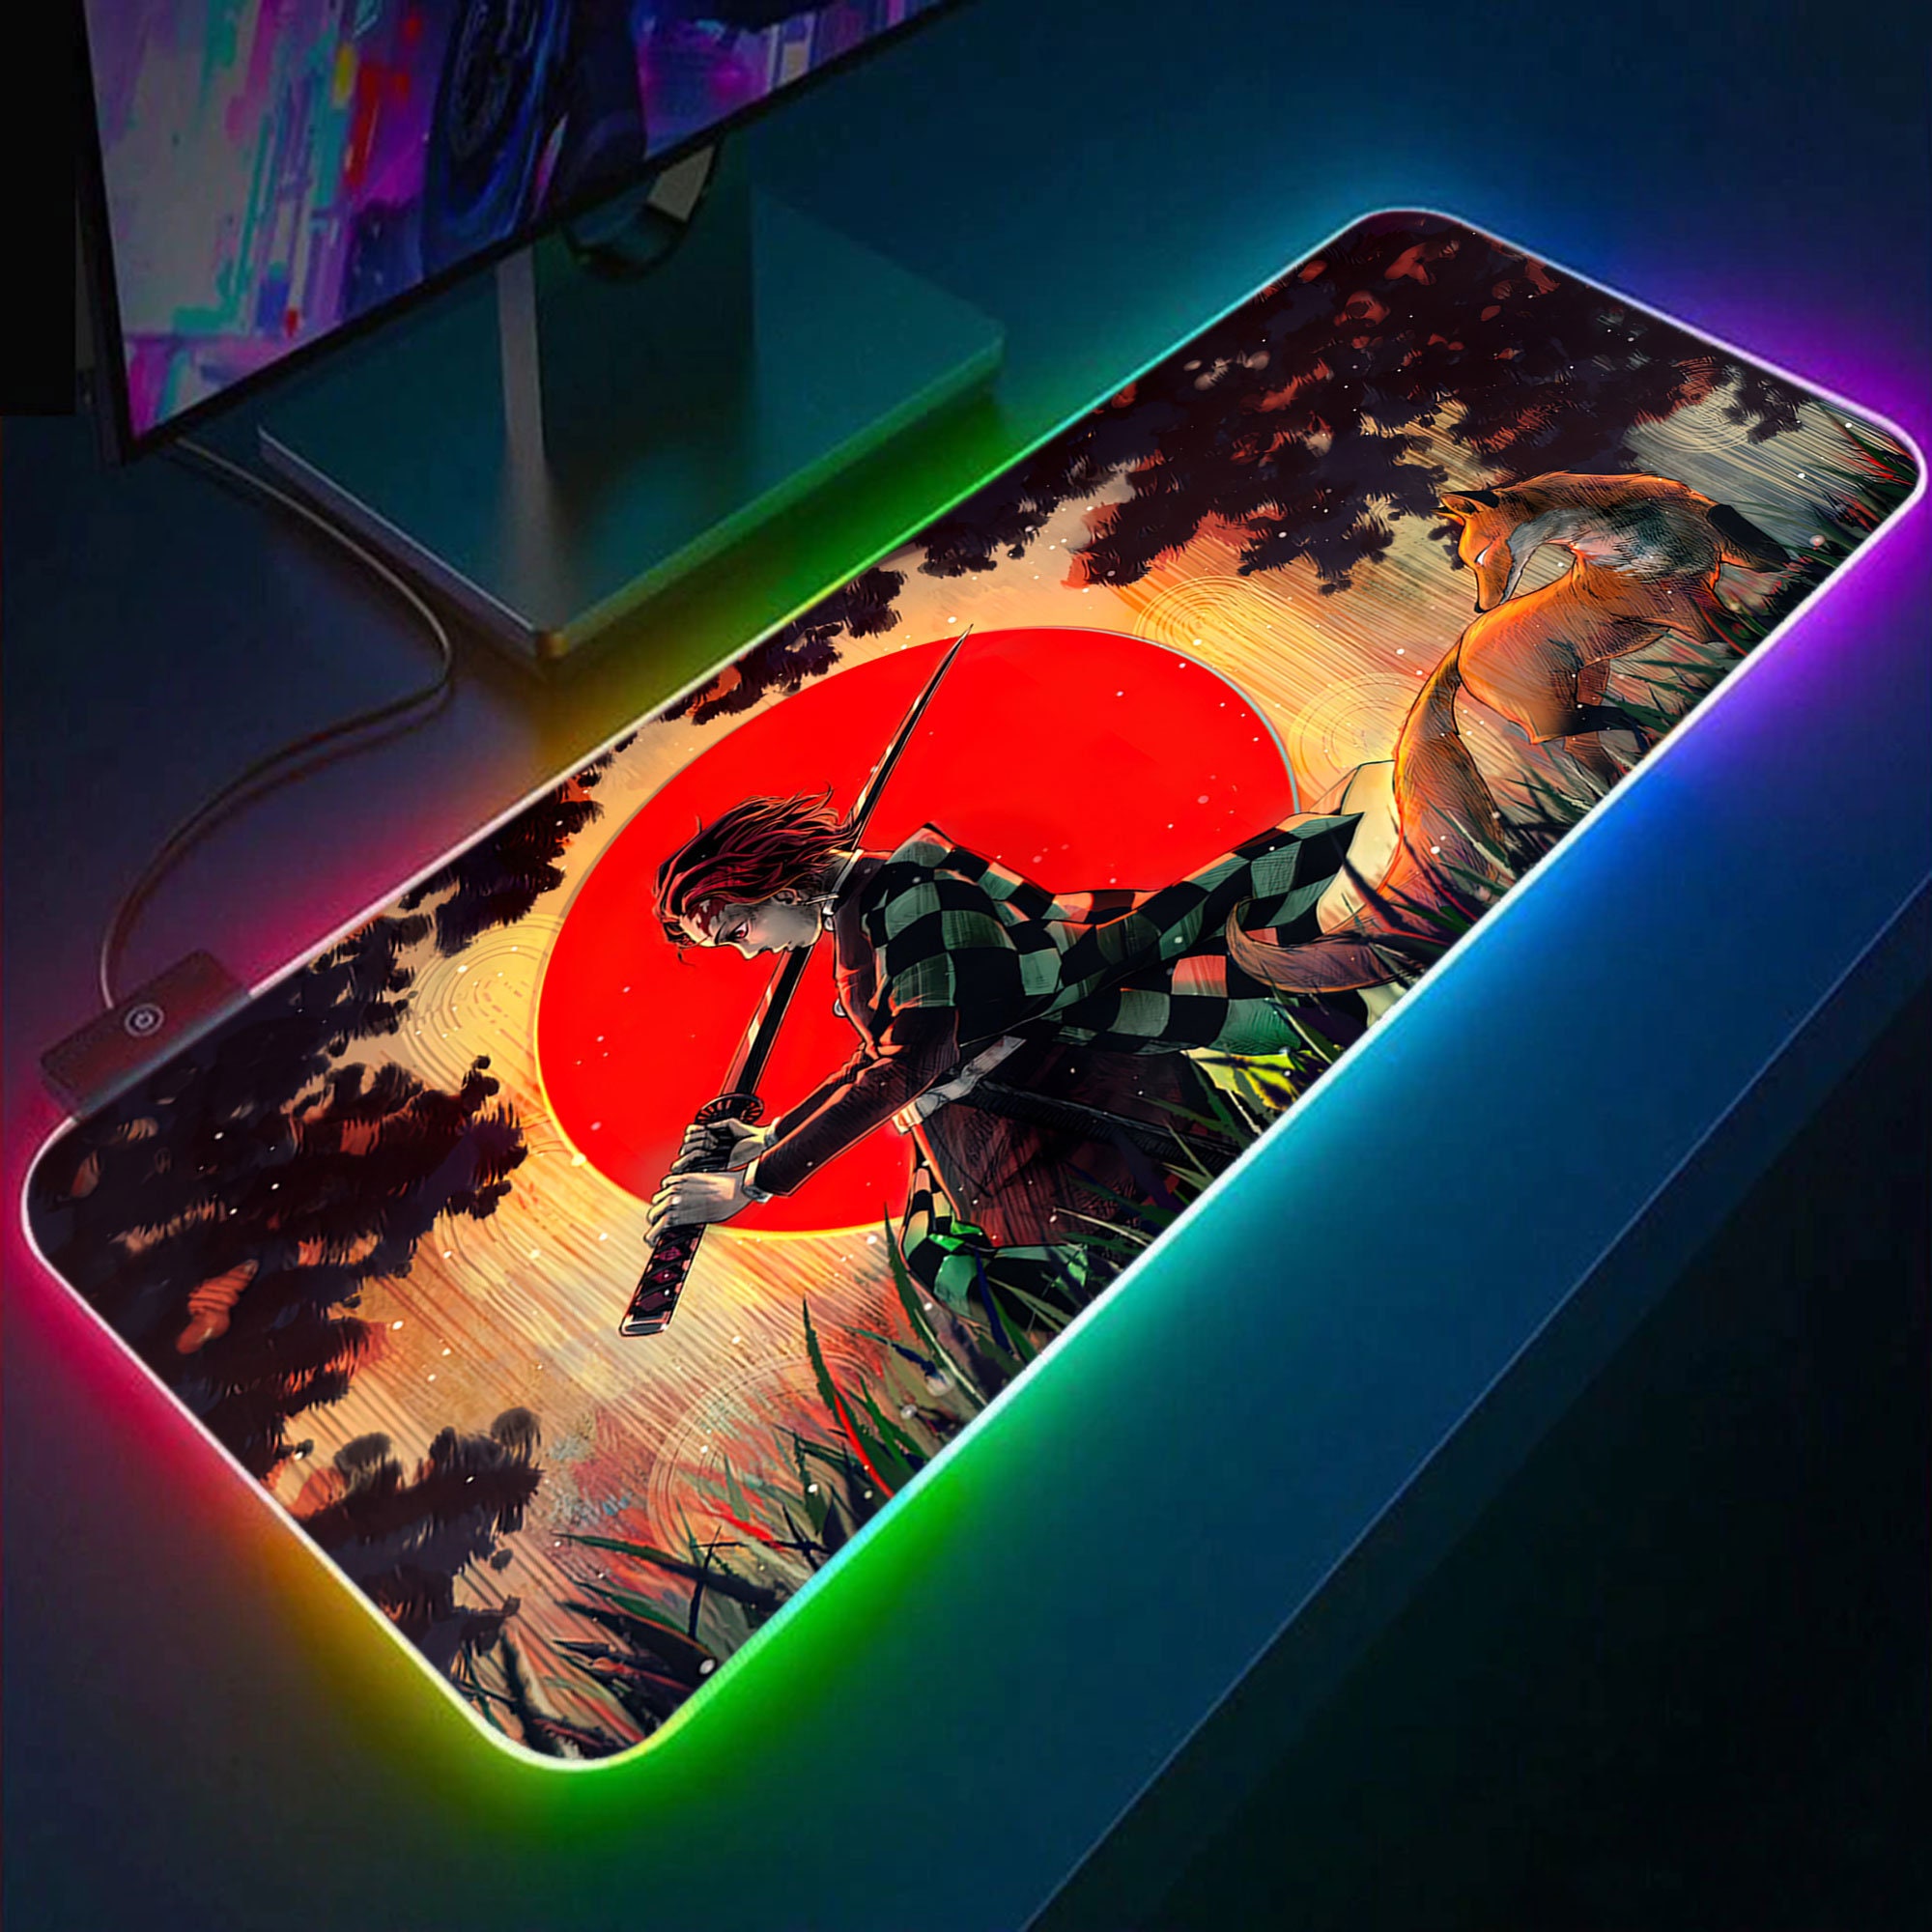 demon RGB Gaming Mouse Pad